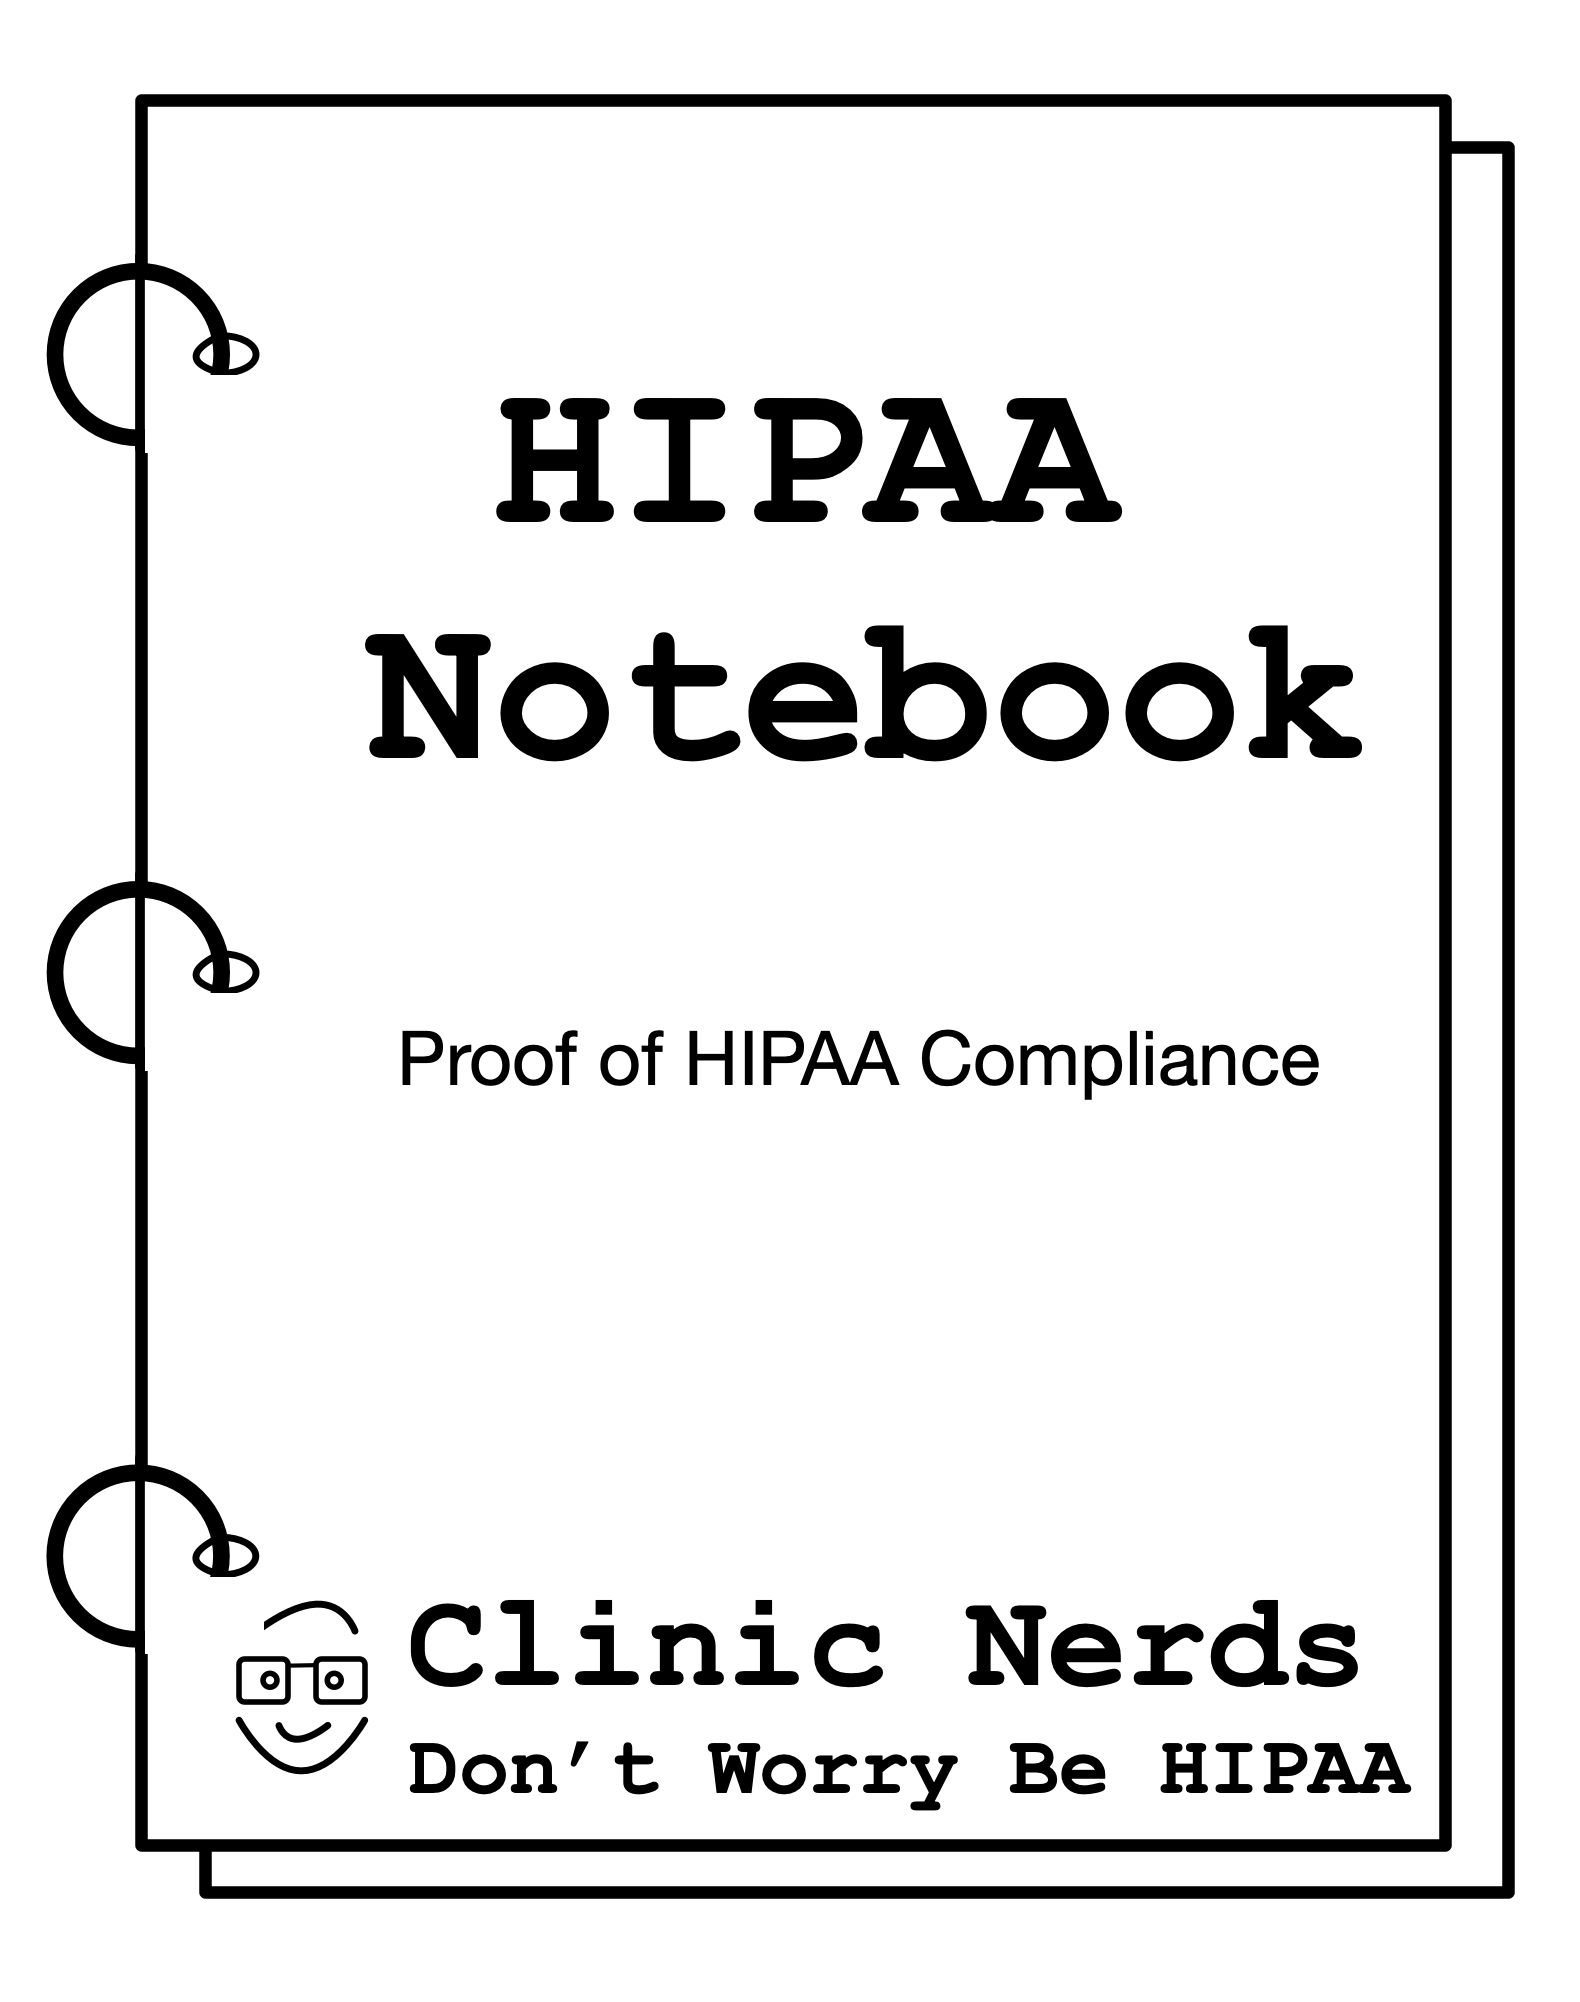 HIPAA Notebook Logo